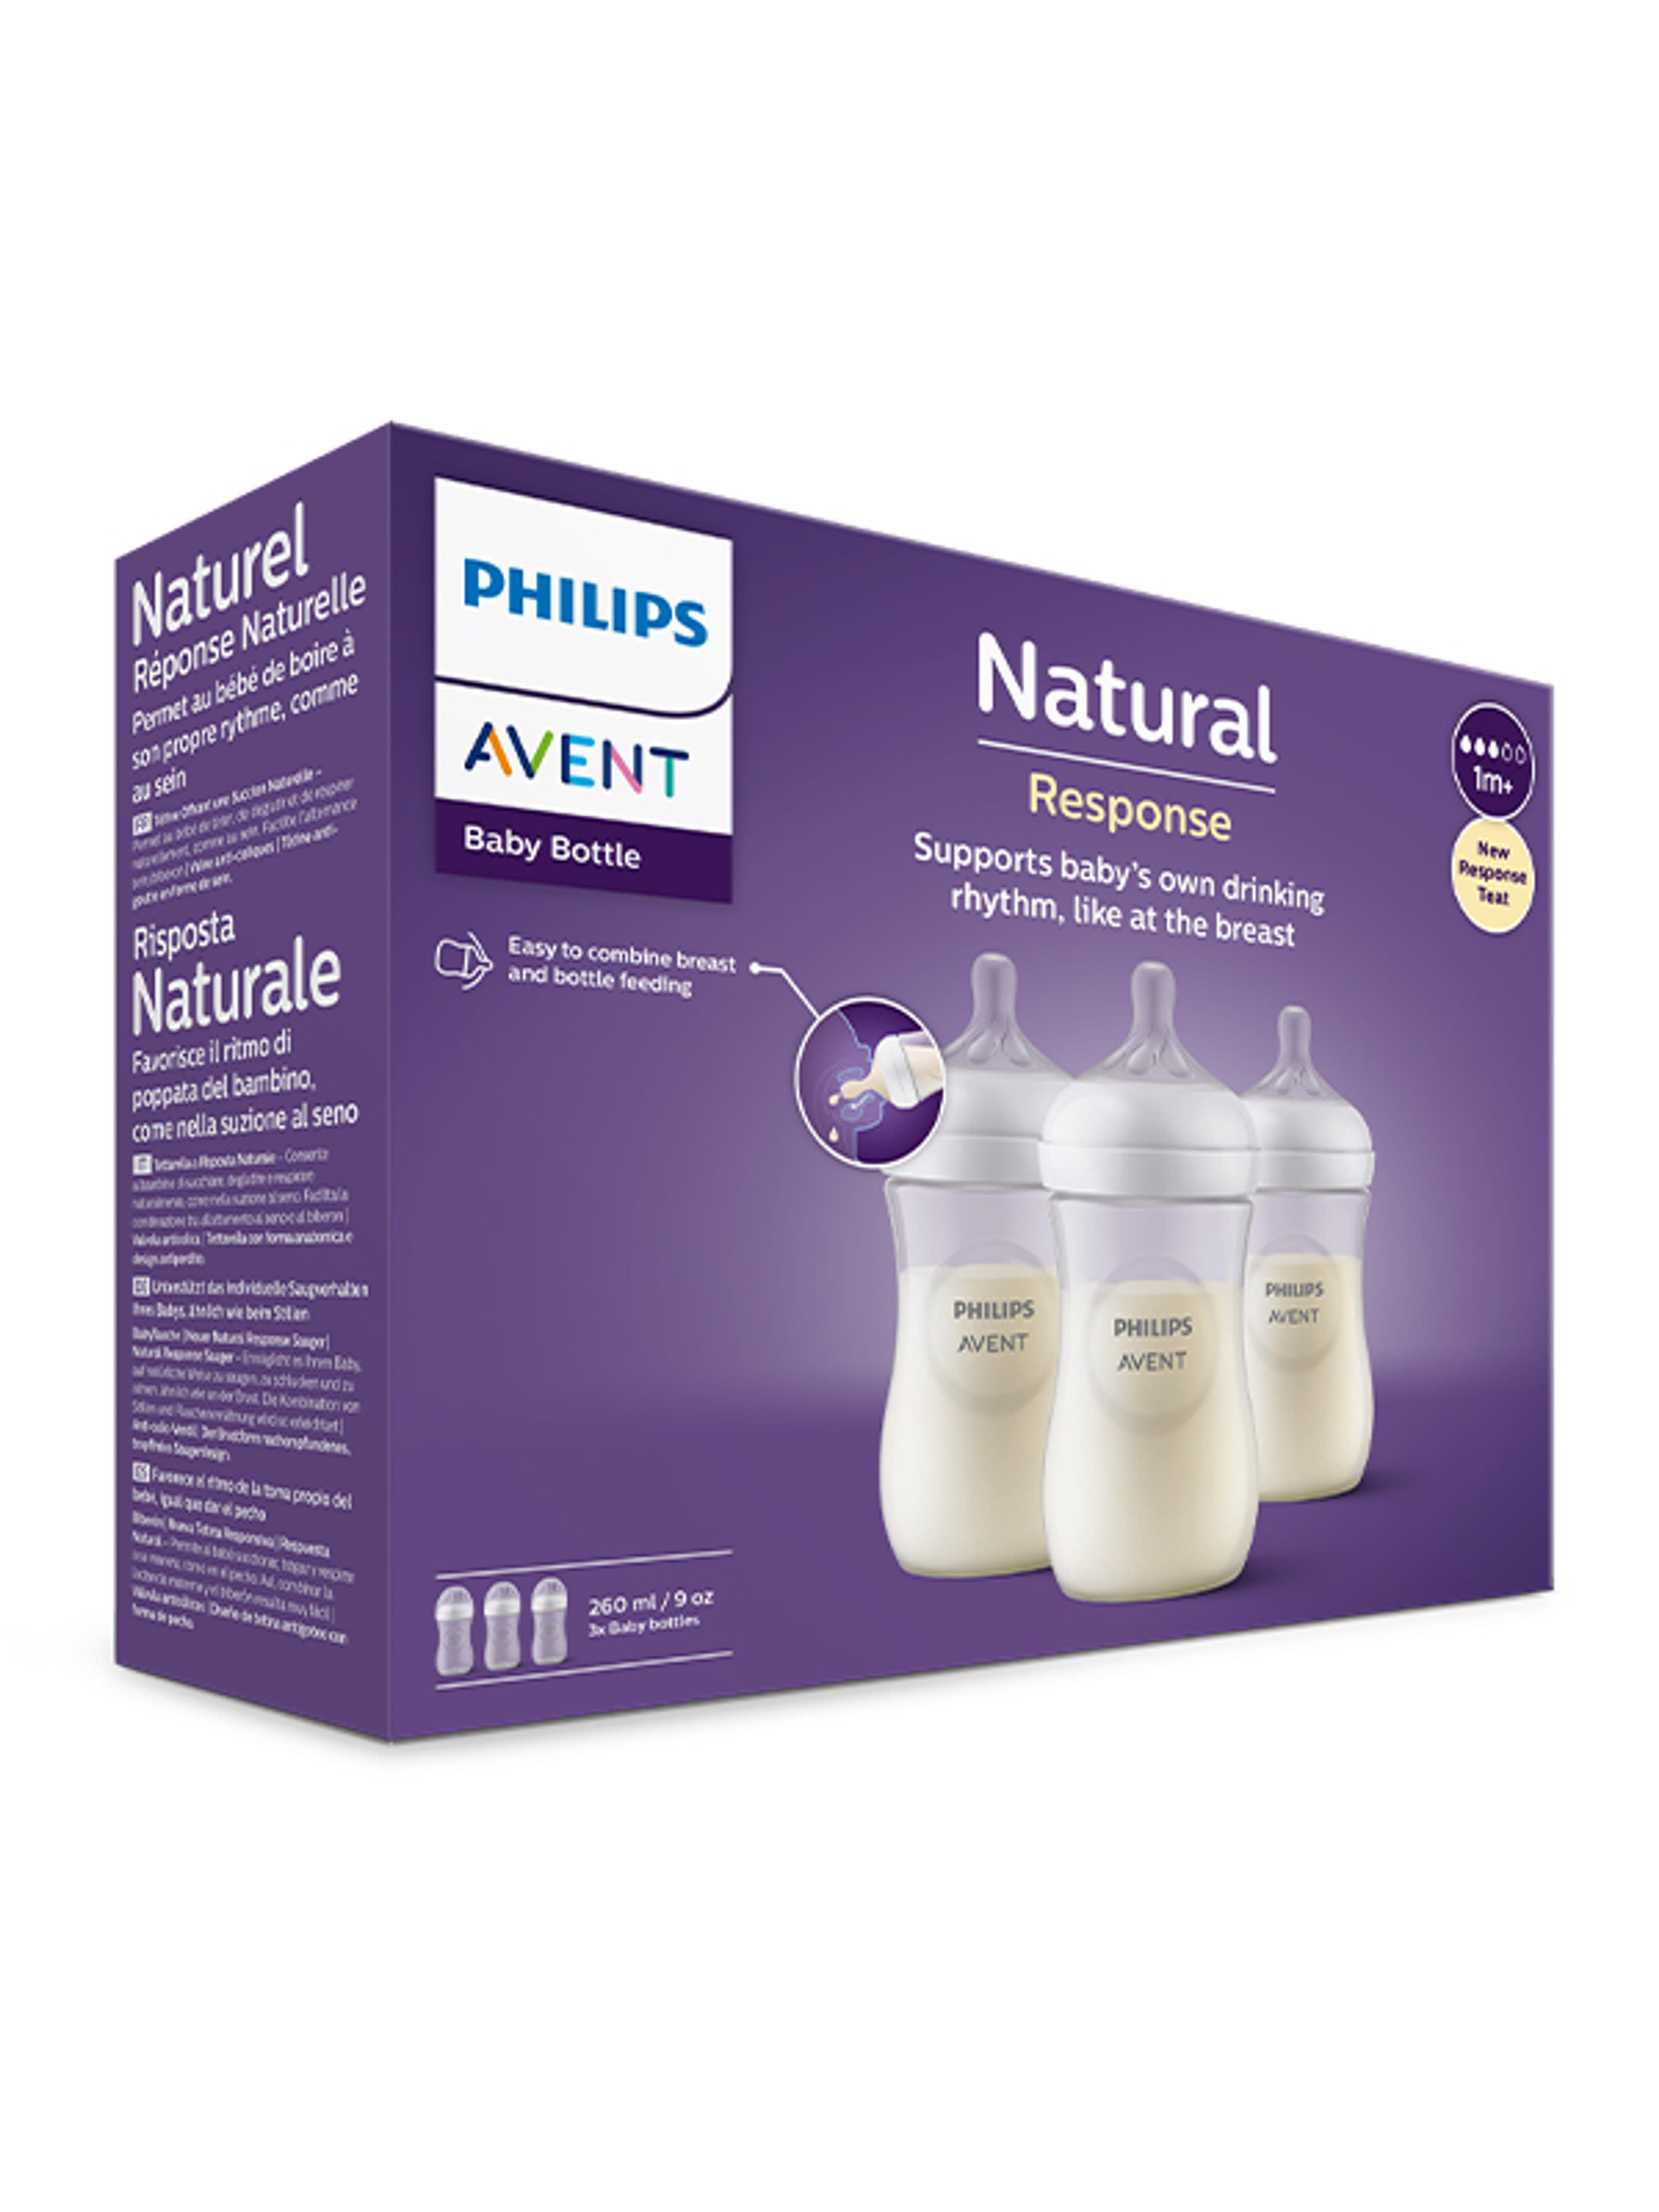 Philips Avent Natural Response cumisüveg 1 hónapos kortól 260 ml - 3 db-3